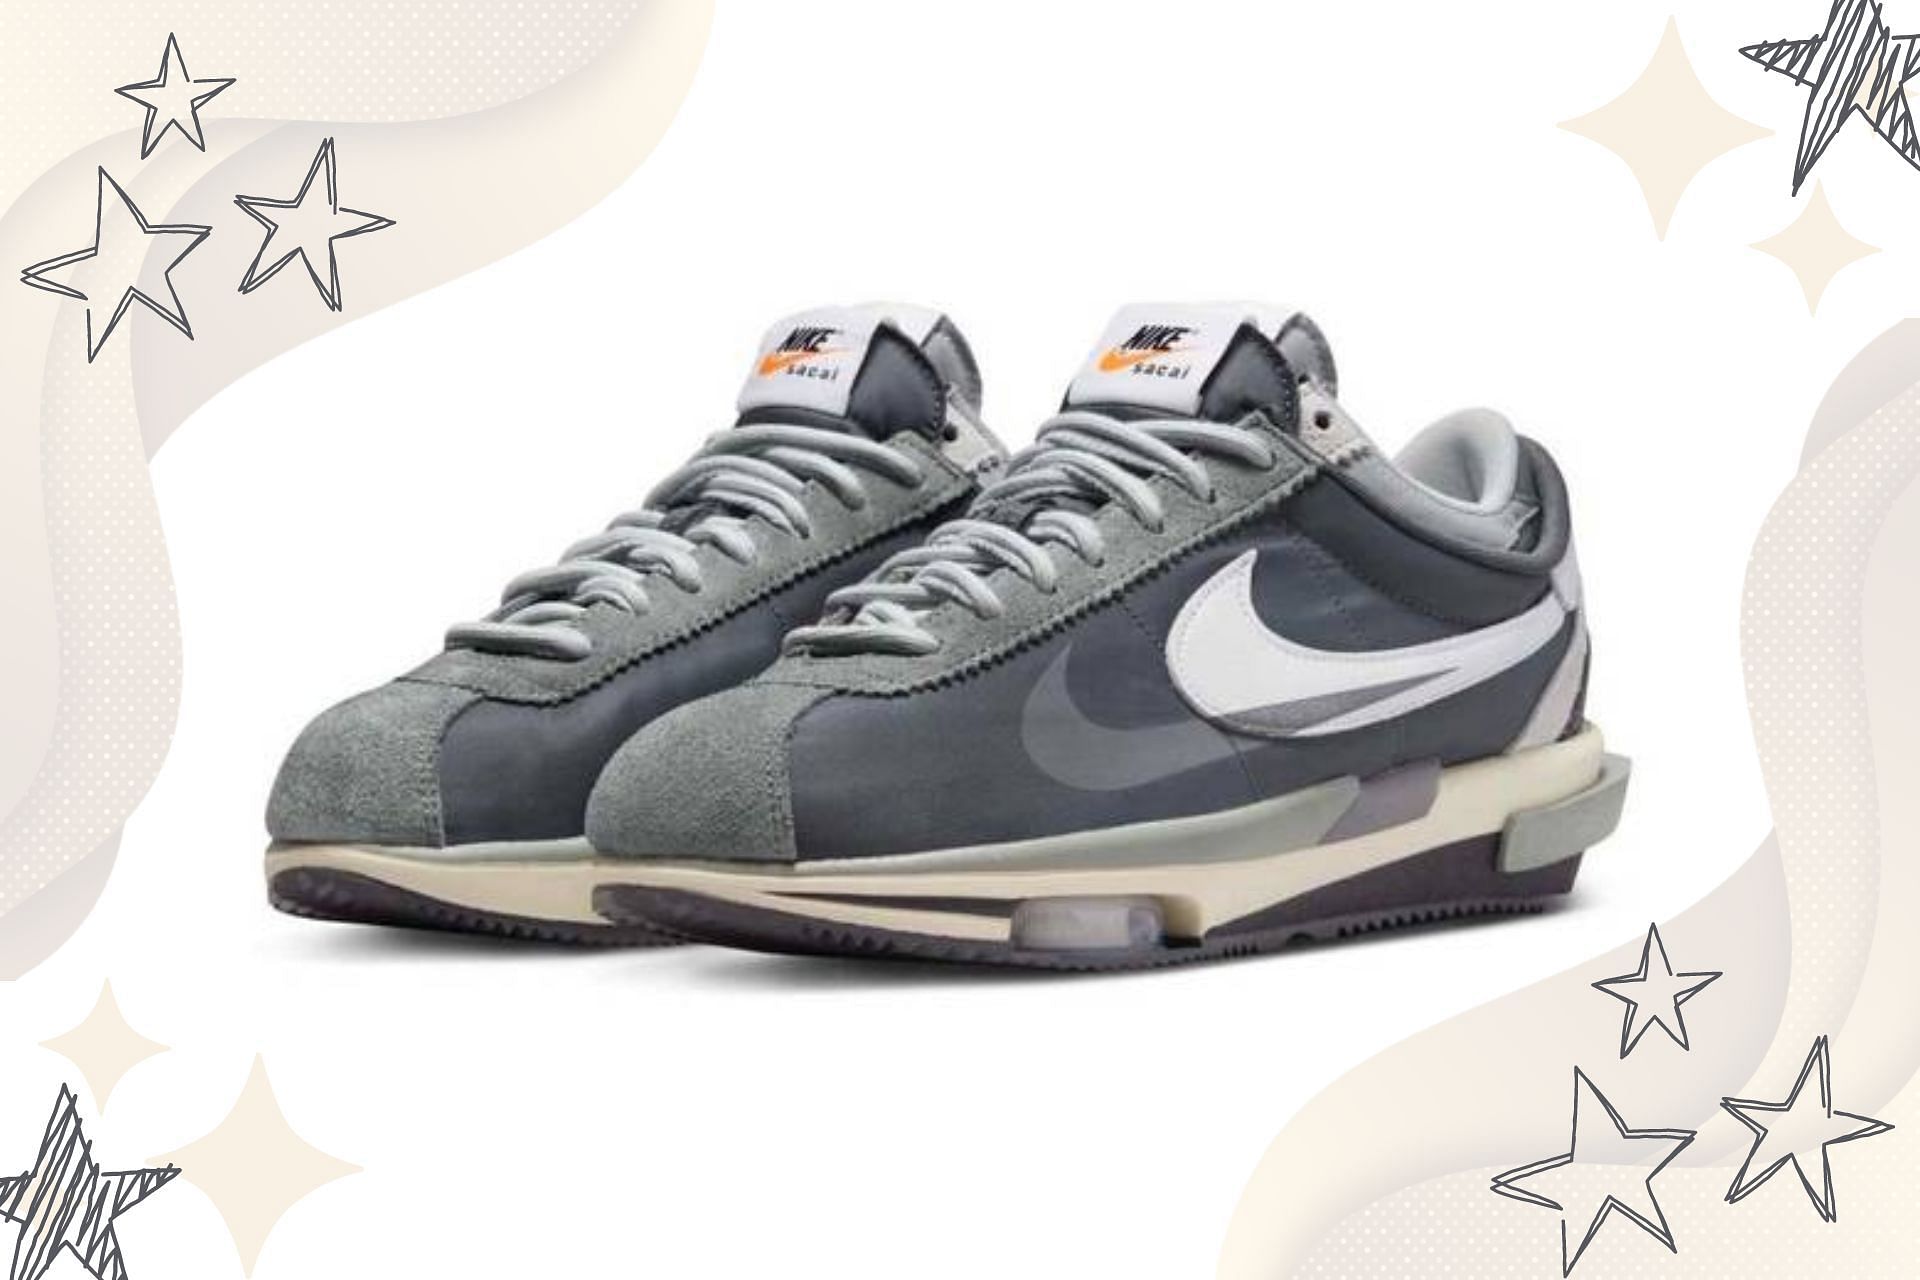 Sacai x Nike Cortez Zoom Iron Gray shoes (Image via Nike)